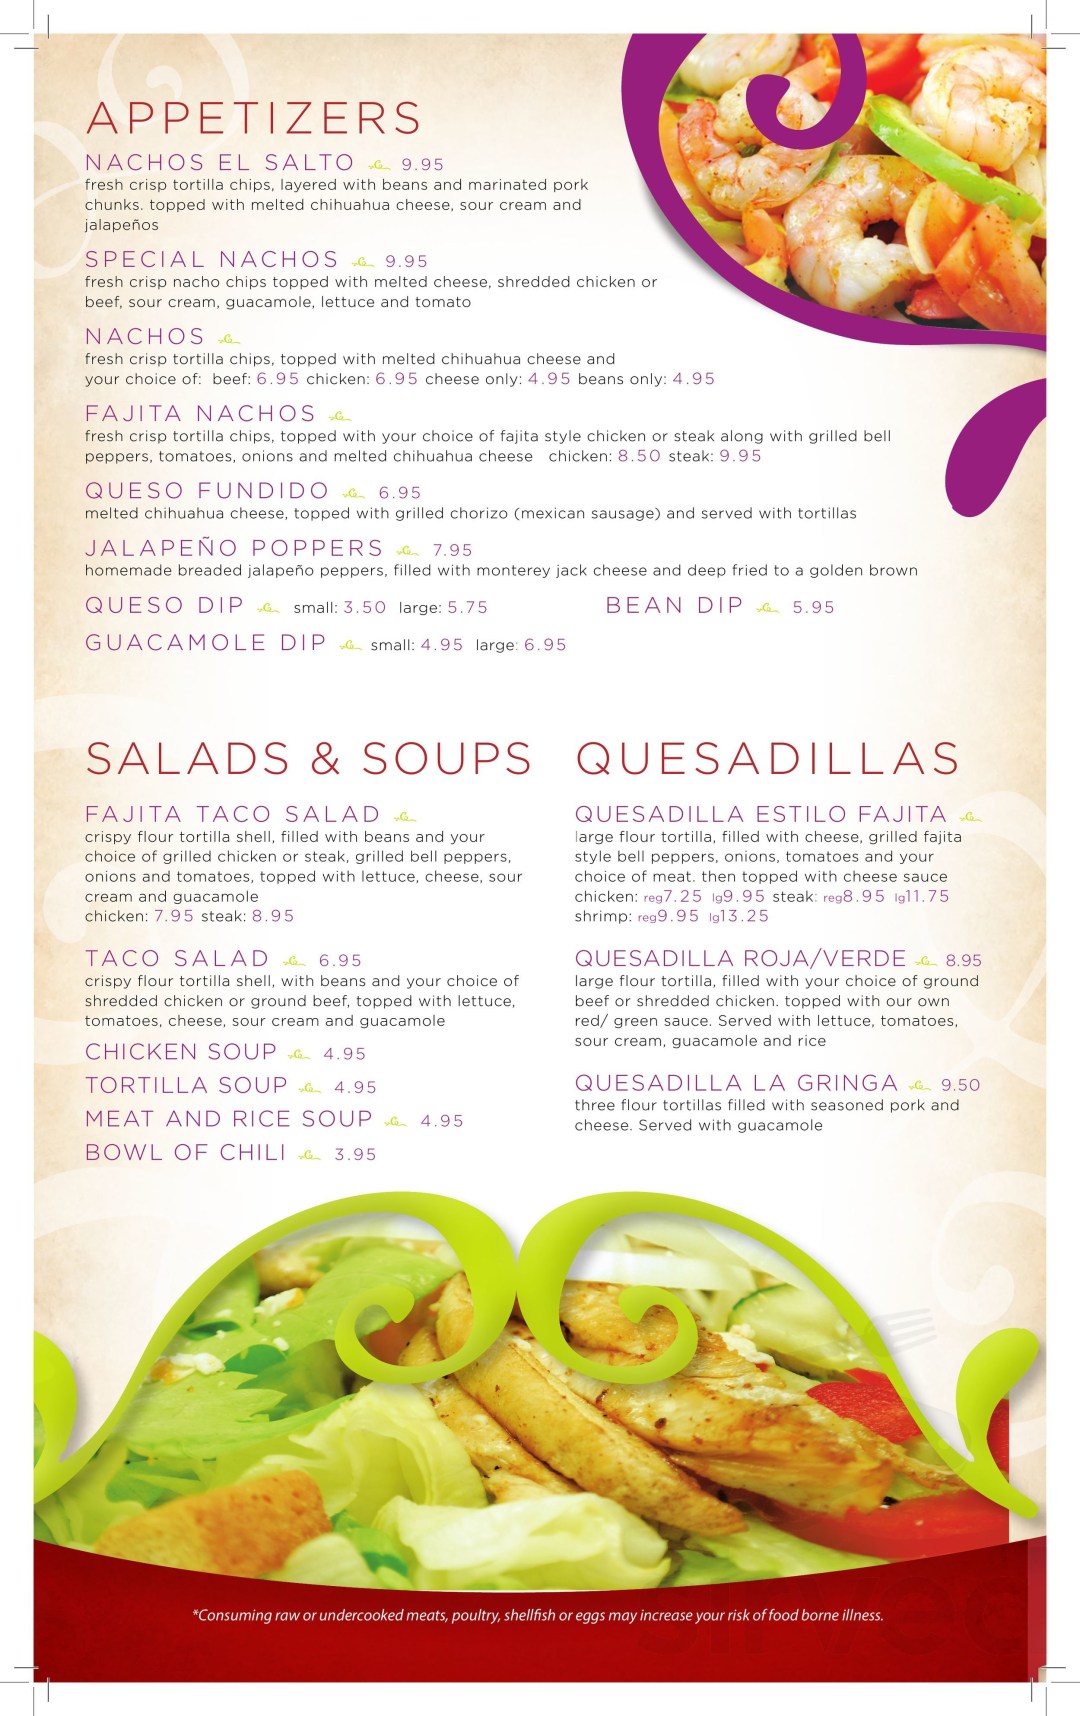 Picture of: El Salto Mexican Restaurant menu in Chesterfield, Missouri, USA